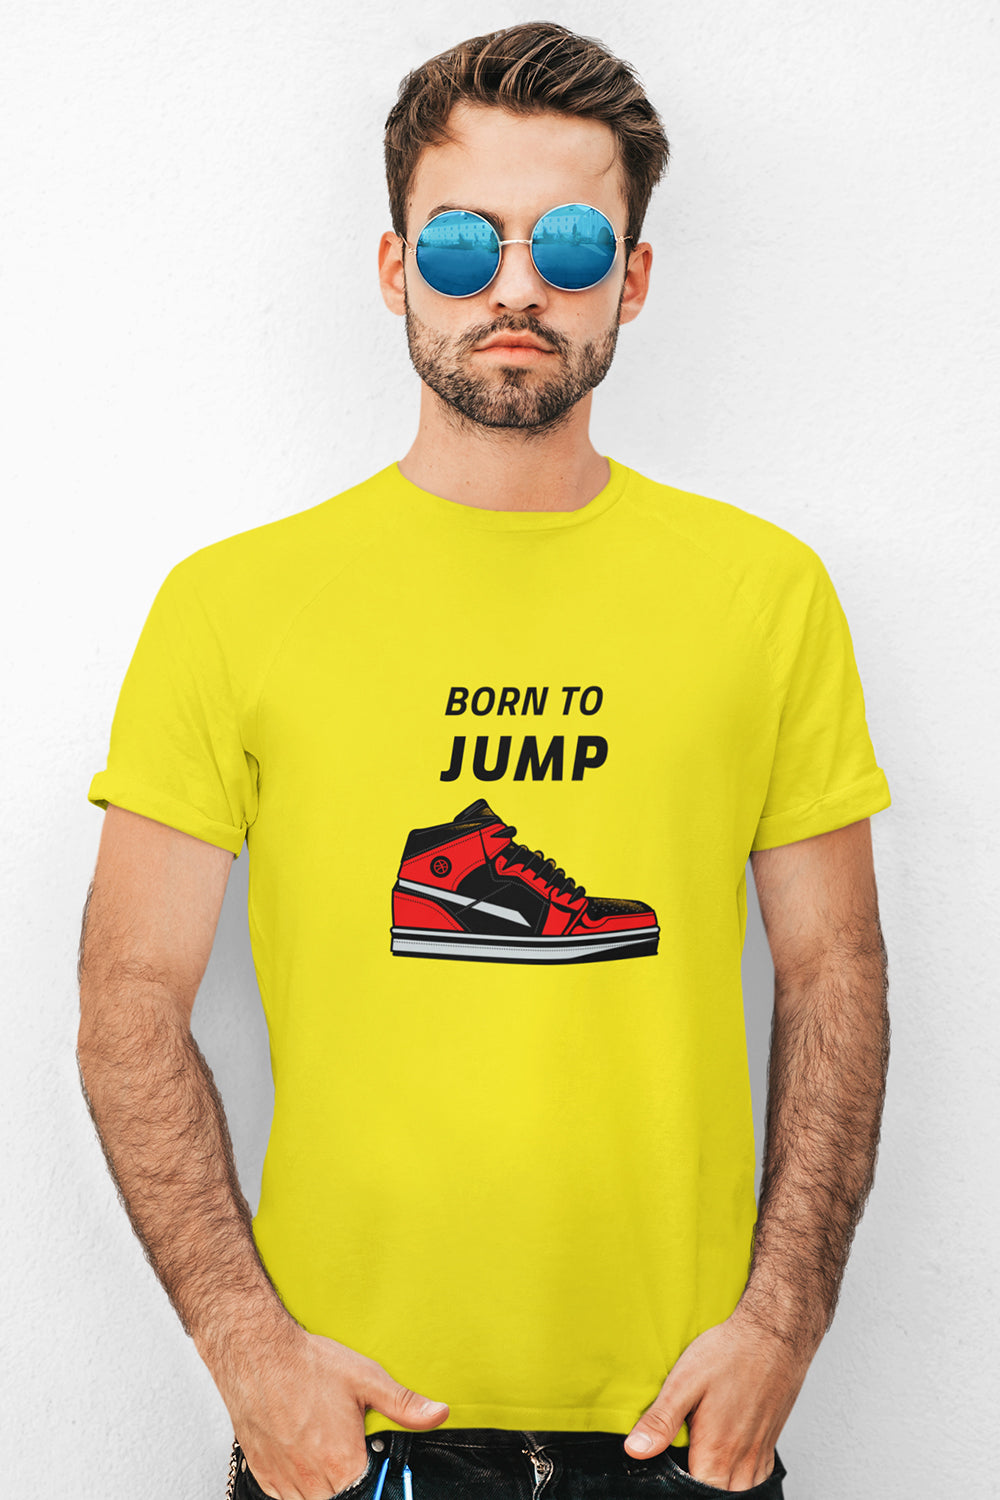 Born To Jump Graphic Printed Yellow Tshirt